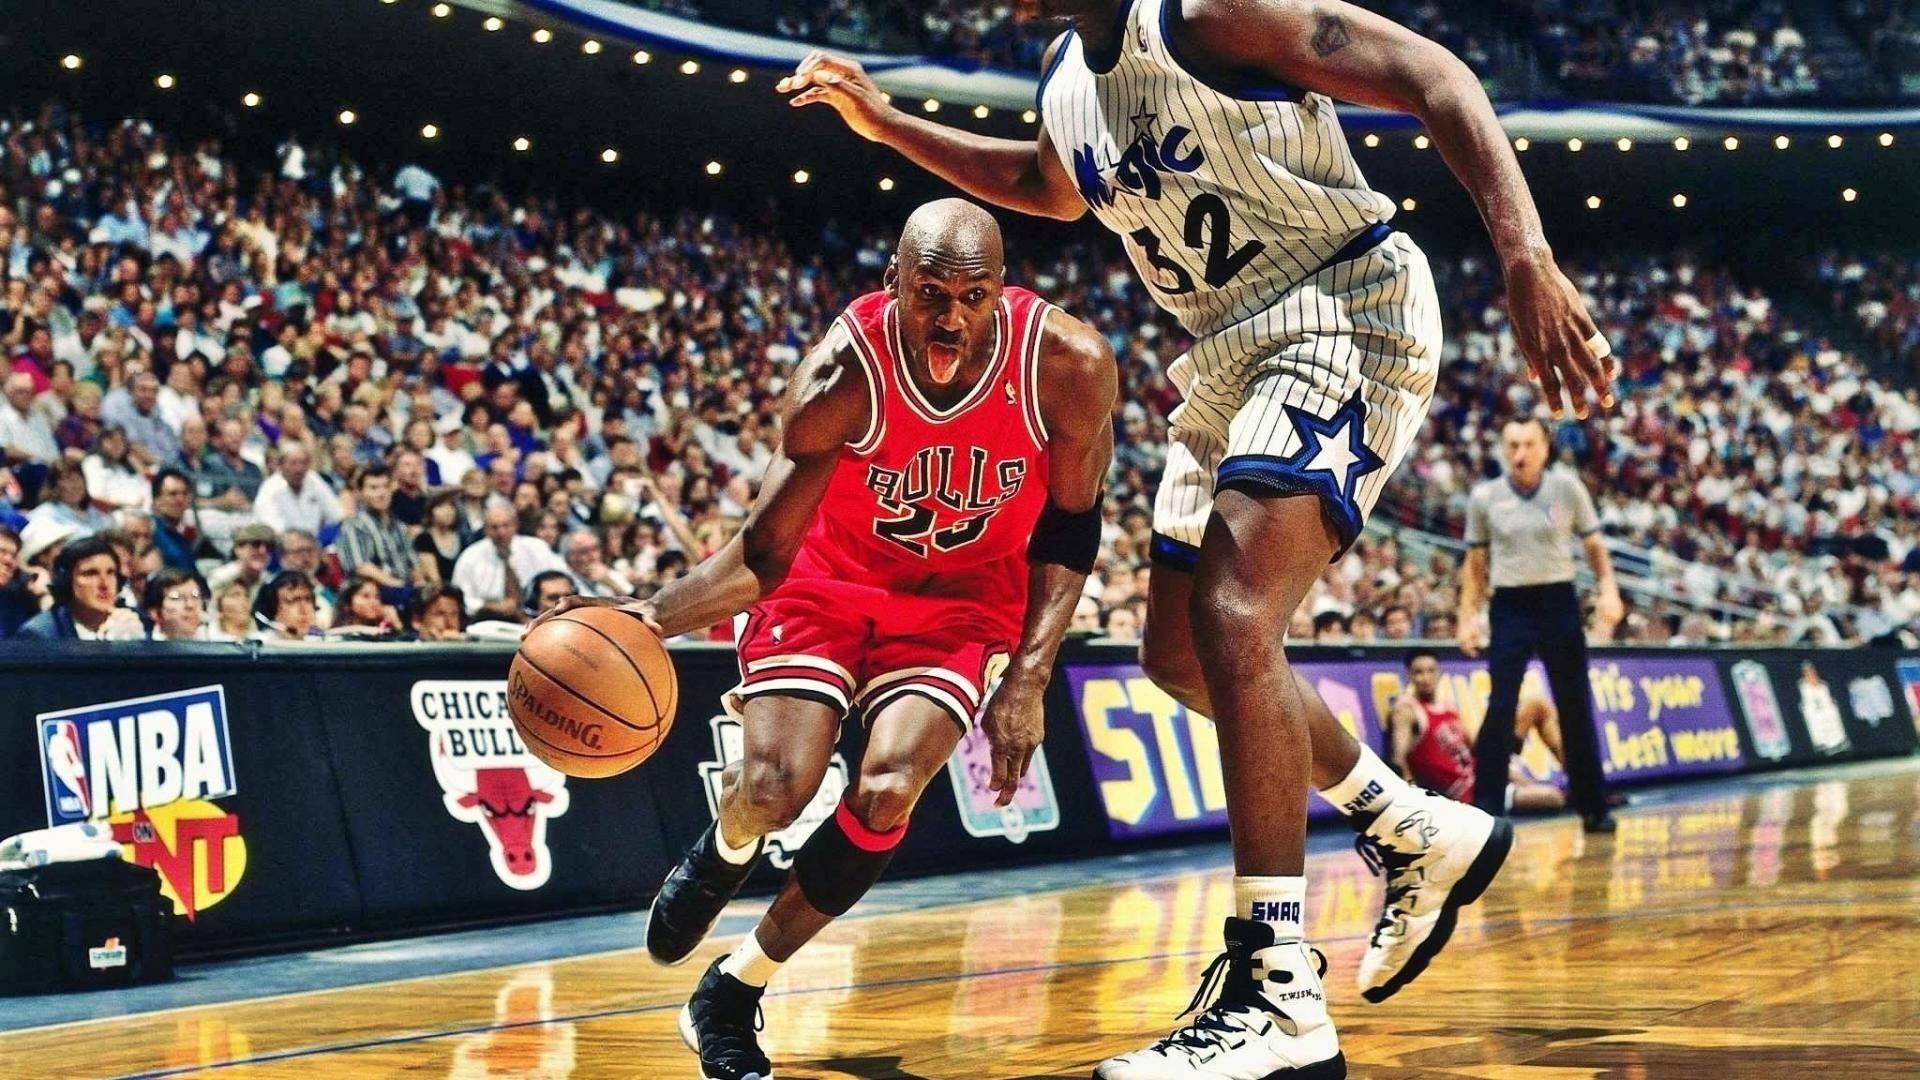 Michael Jordan Wallpaper Image Photo Picture Background